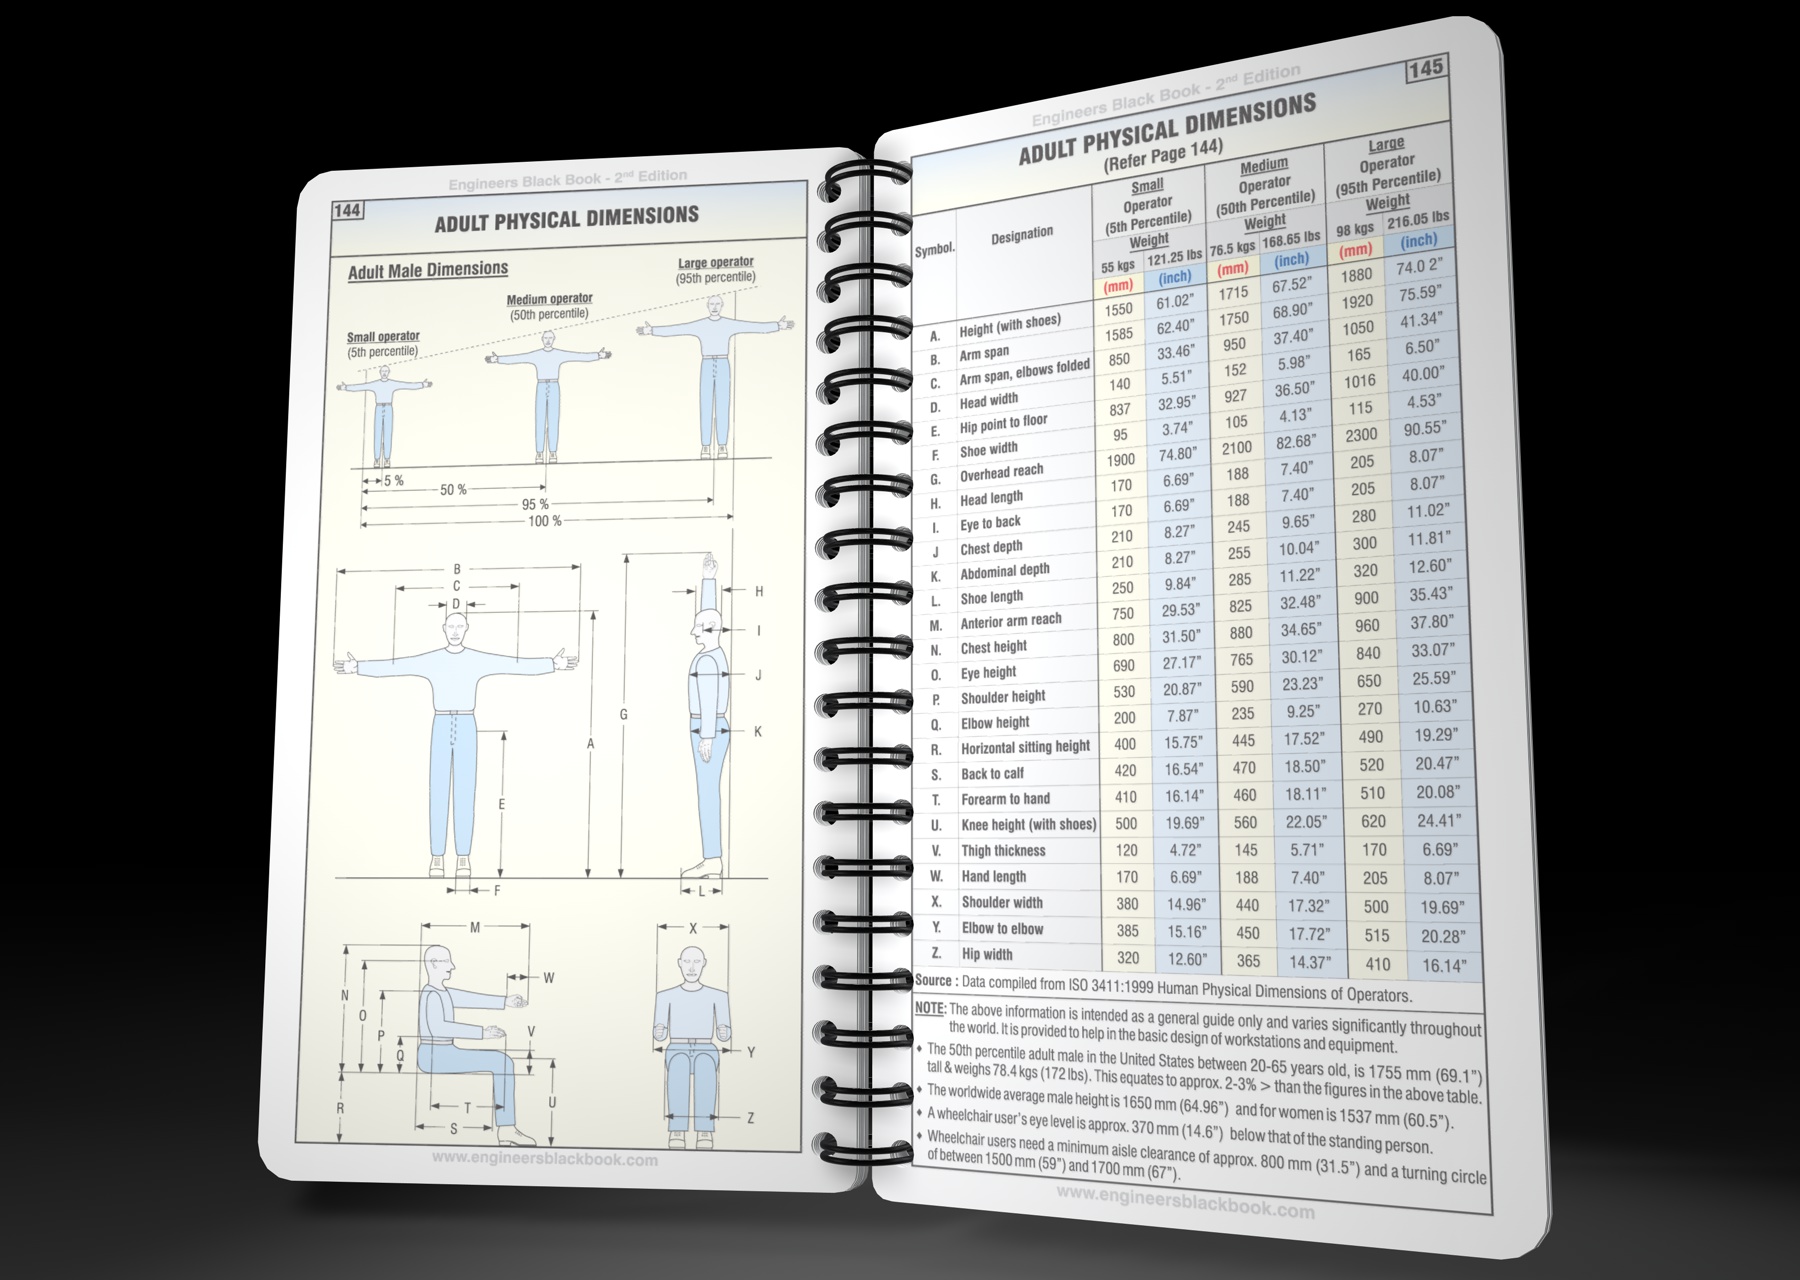 engineers black book 2nd edition pdf